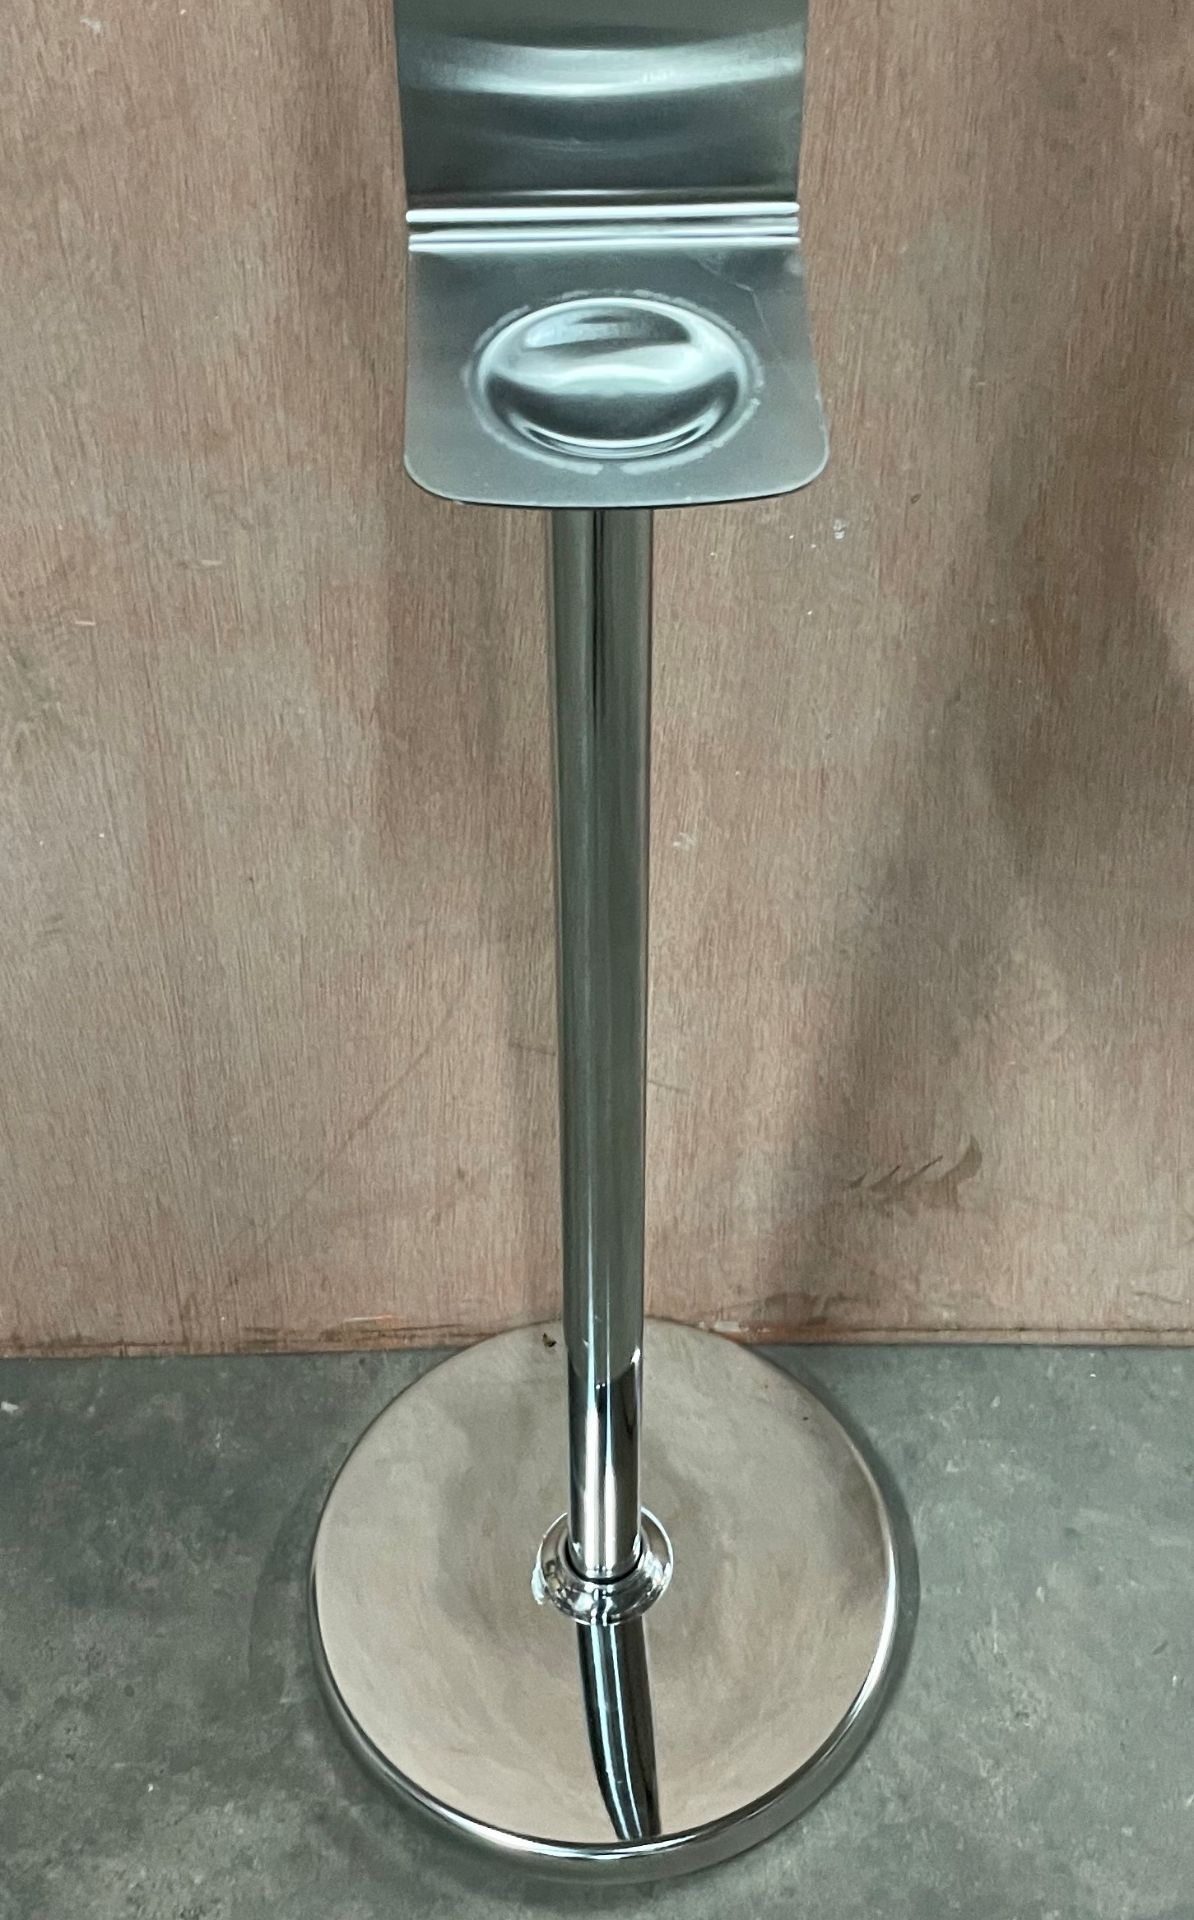 2x HCI Metal Sanitizer Stands | HCI Liquid Bottle Styled Soap Dispensers |HCI 2/4 Metal Bases - Image 3 of 16